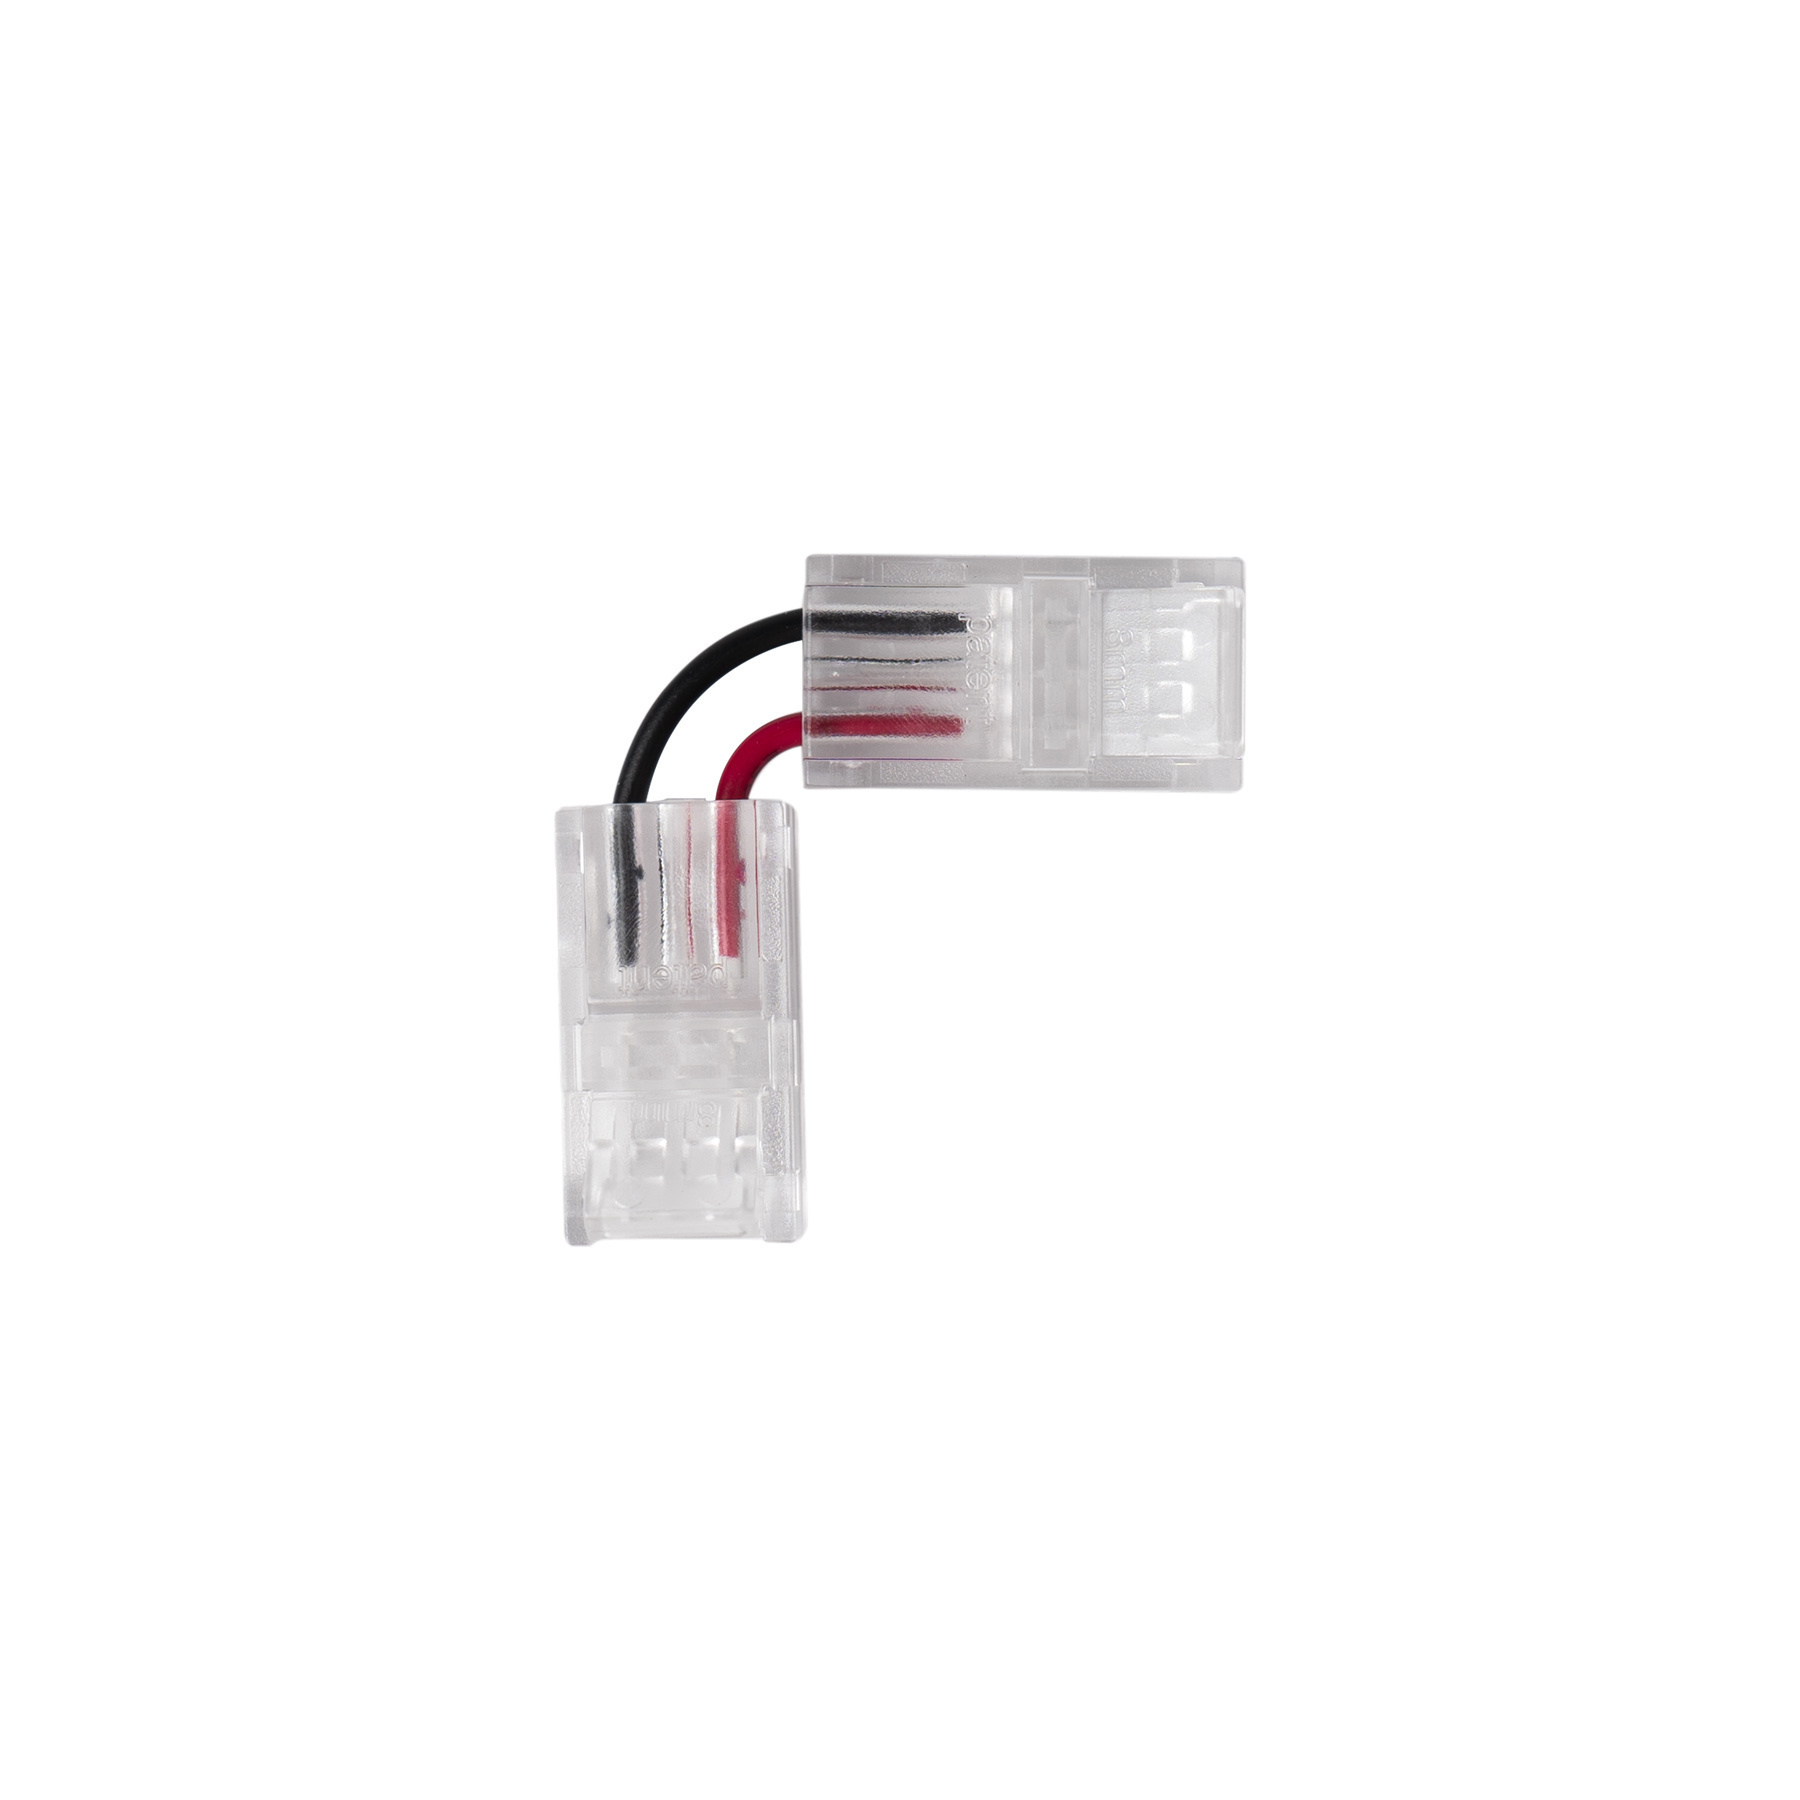 KIT Silikonkleber für LED-Streifen + Stecker + Abdeckung + Endkappe